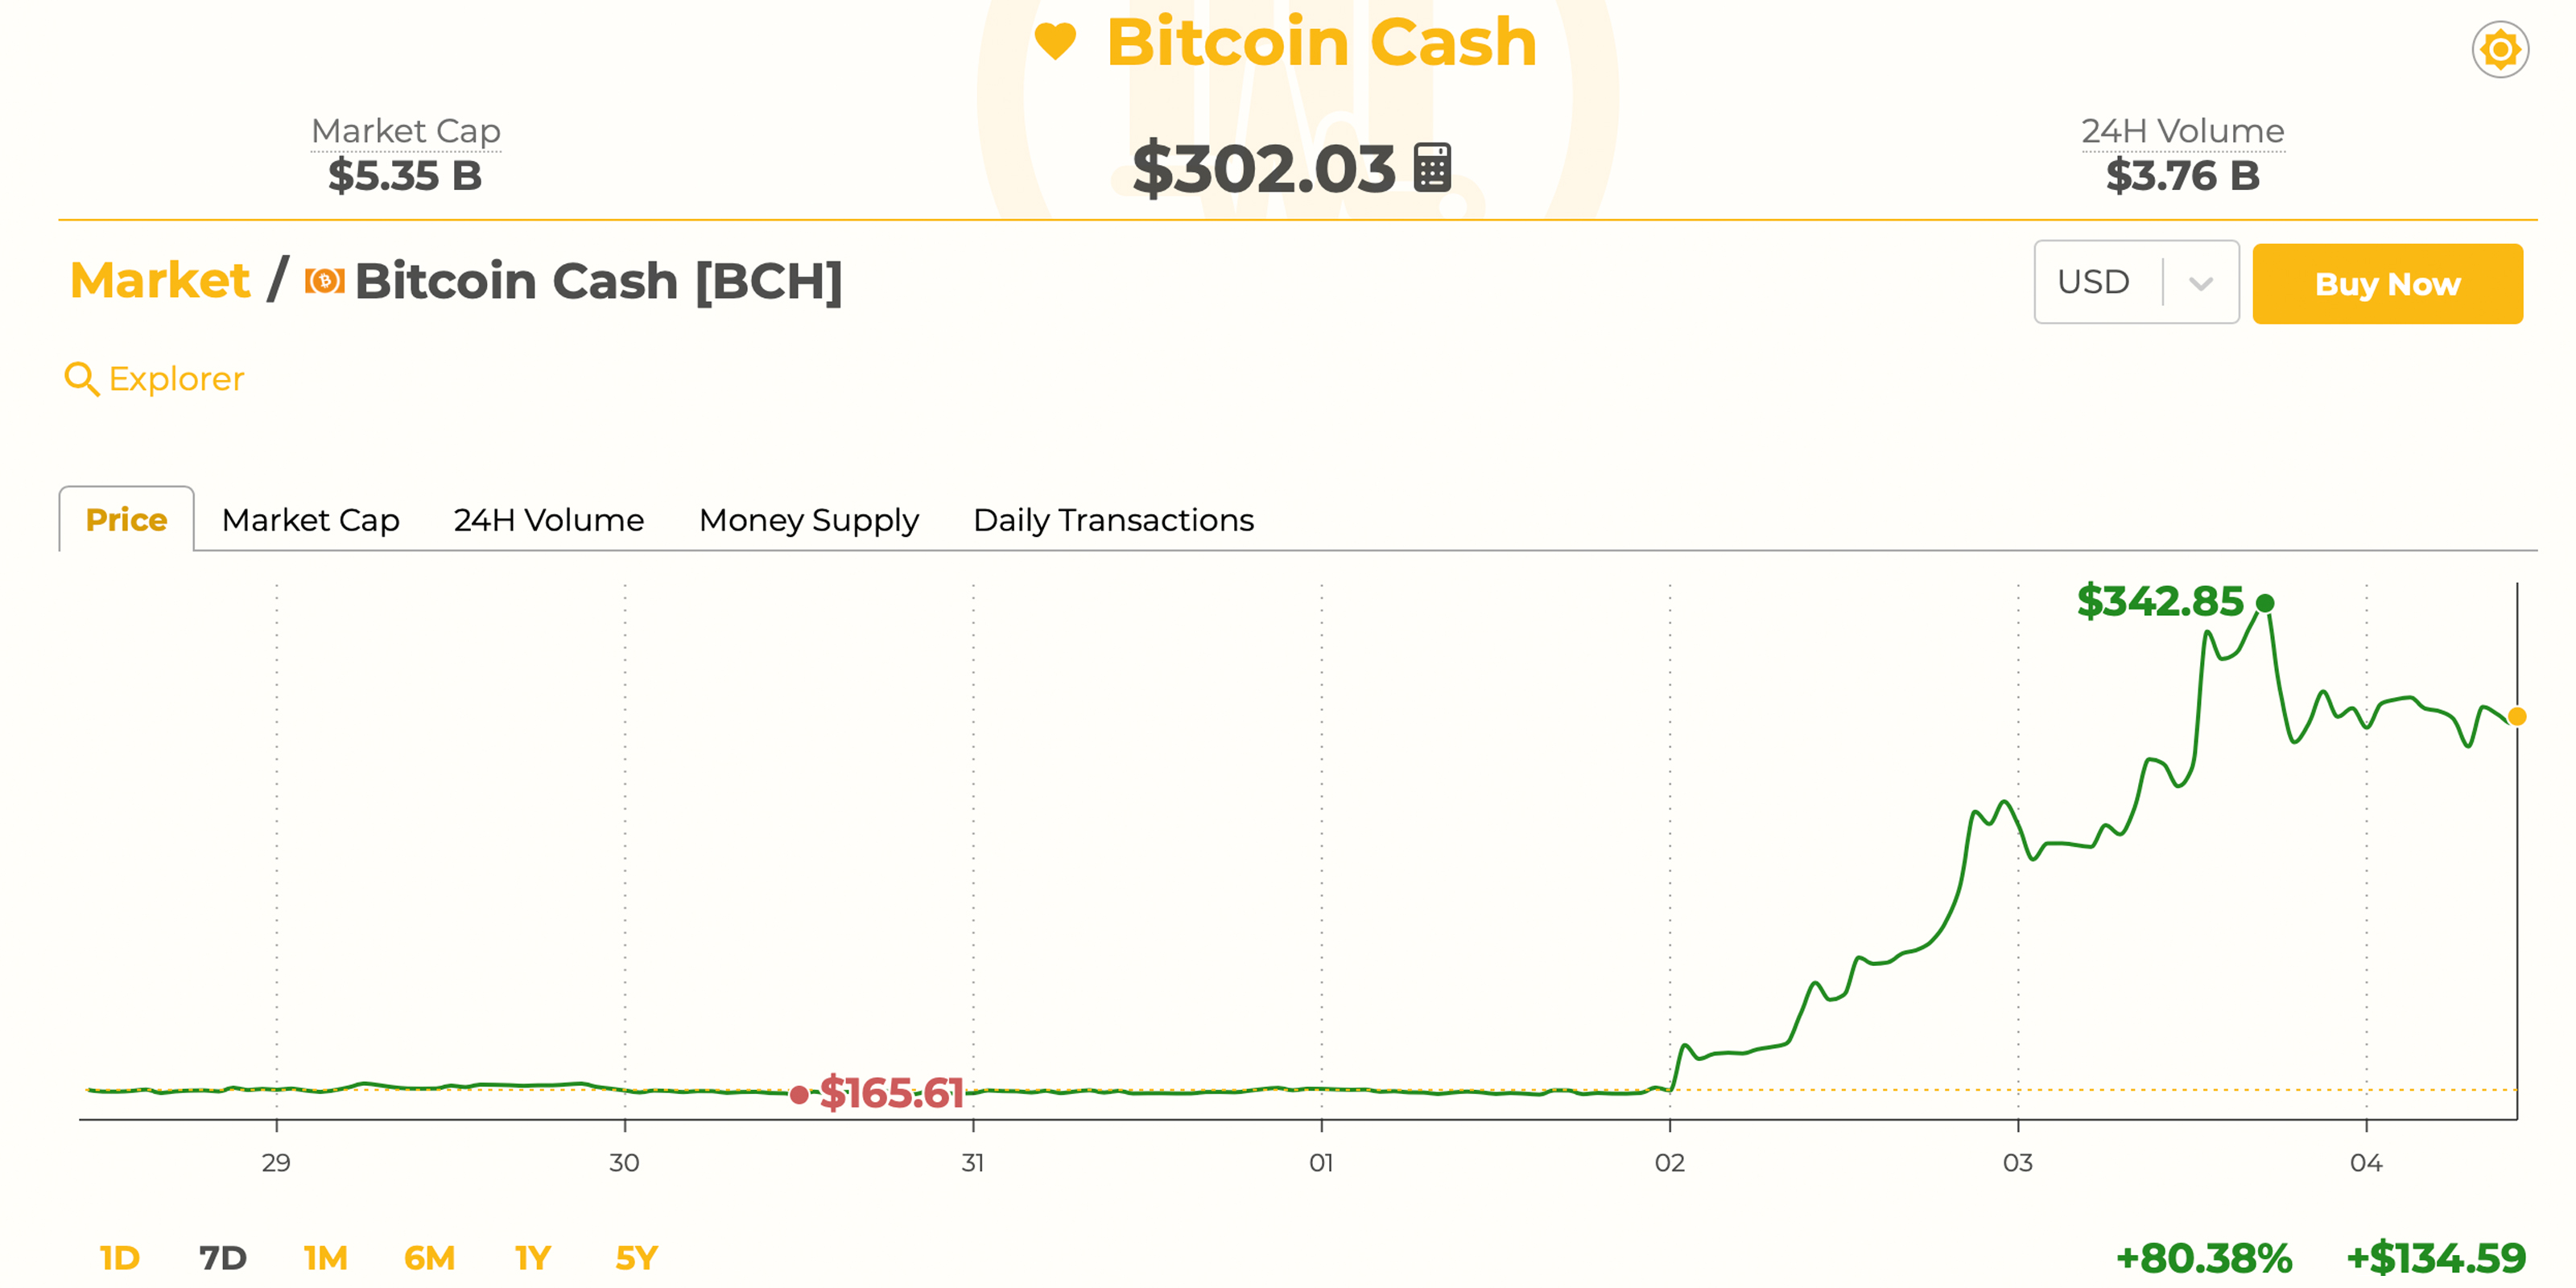 btc cash price now